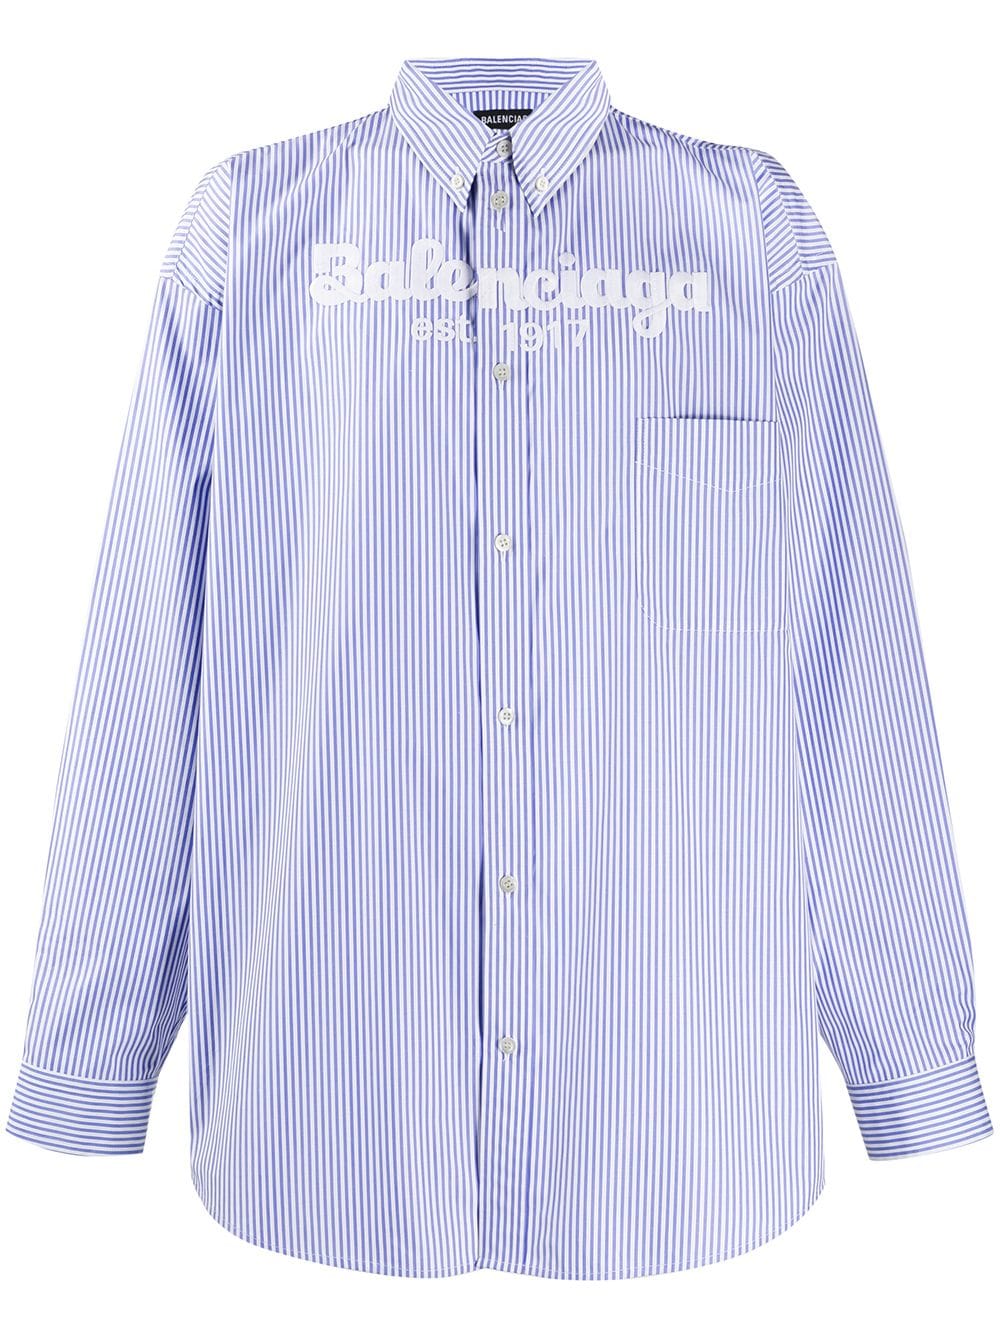 фото Balenciaga рубашка с вышитым логотипом